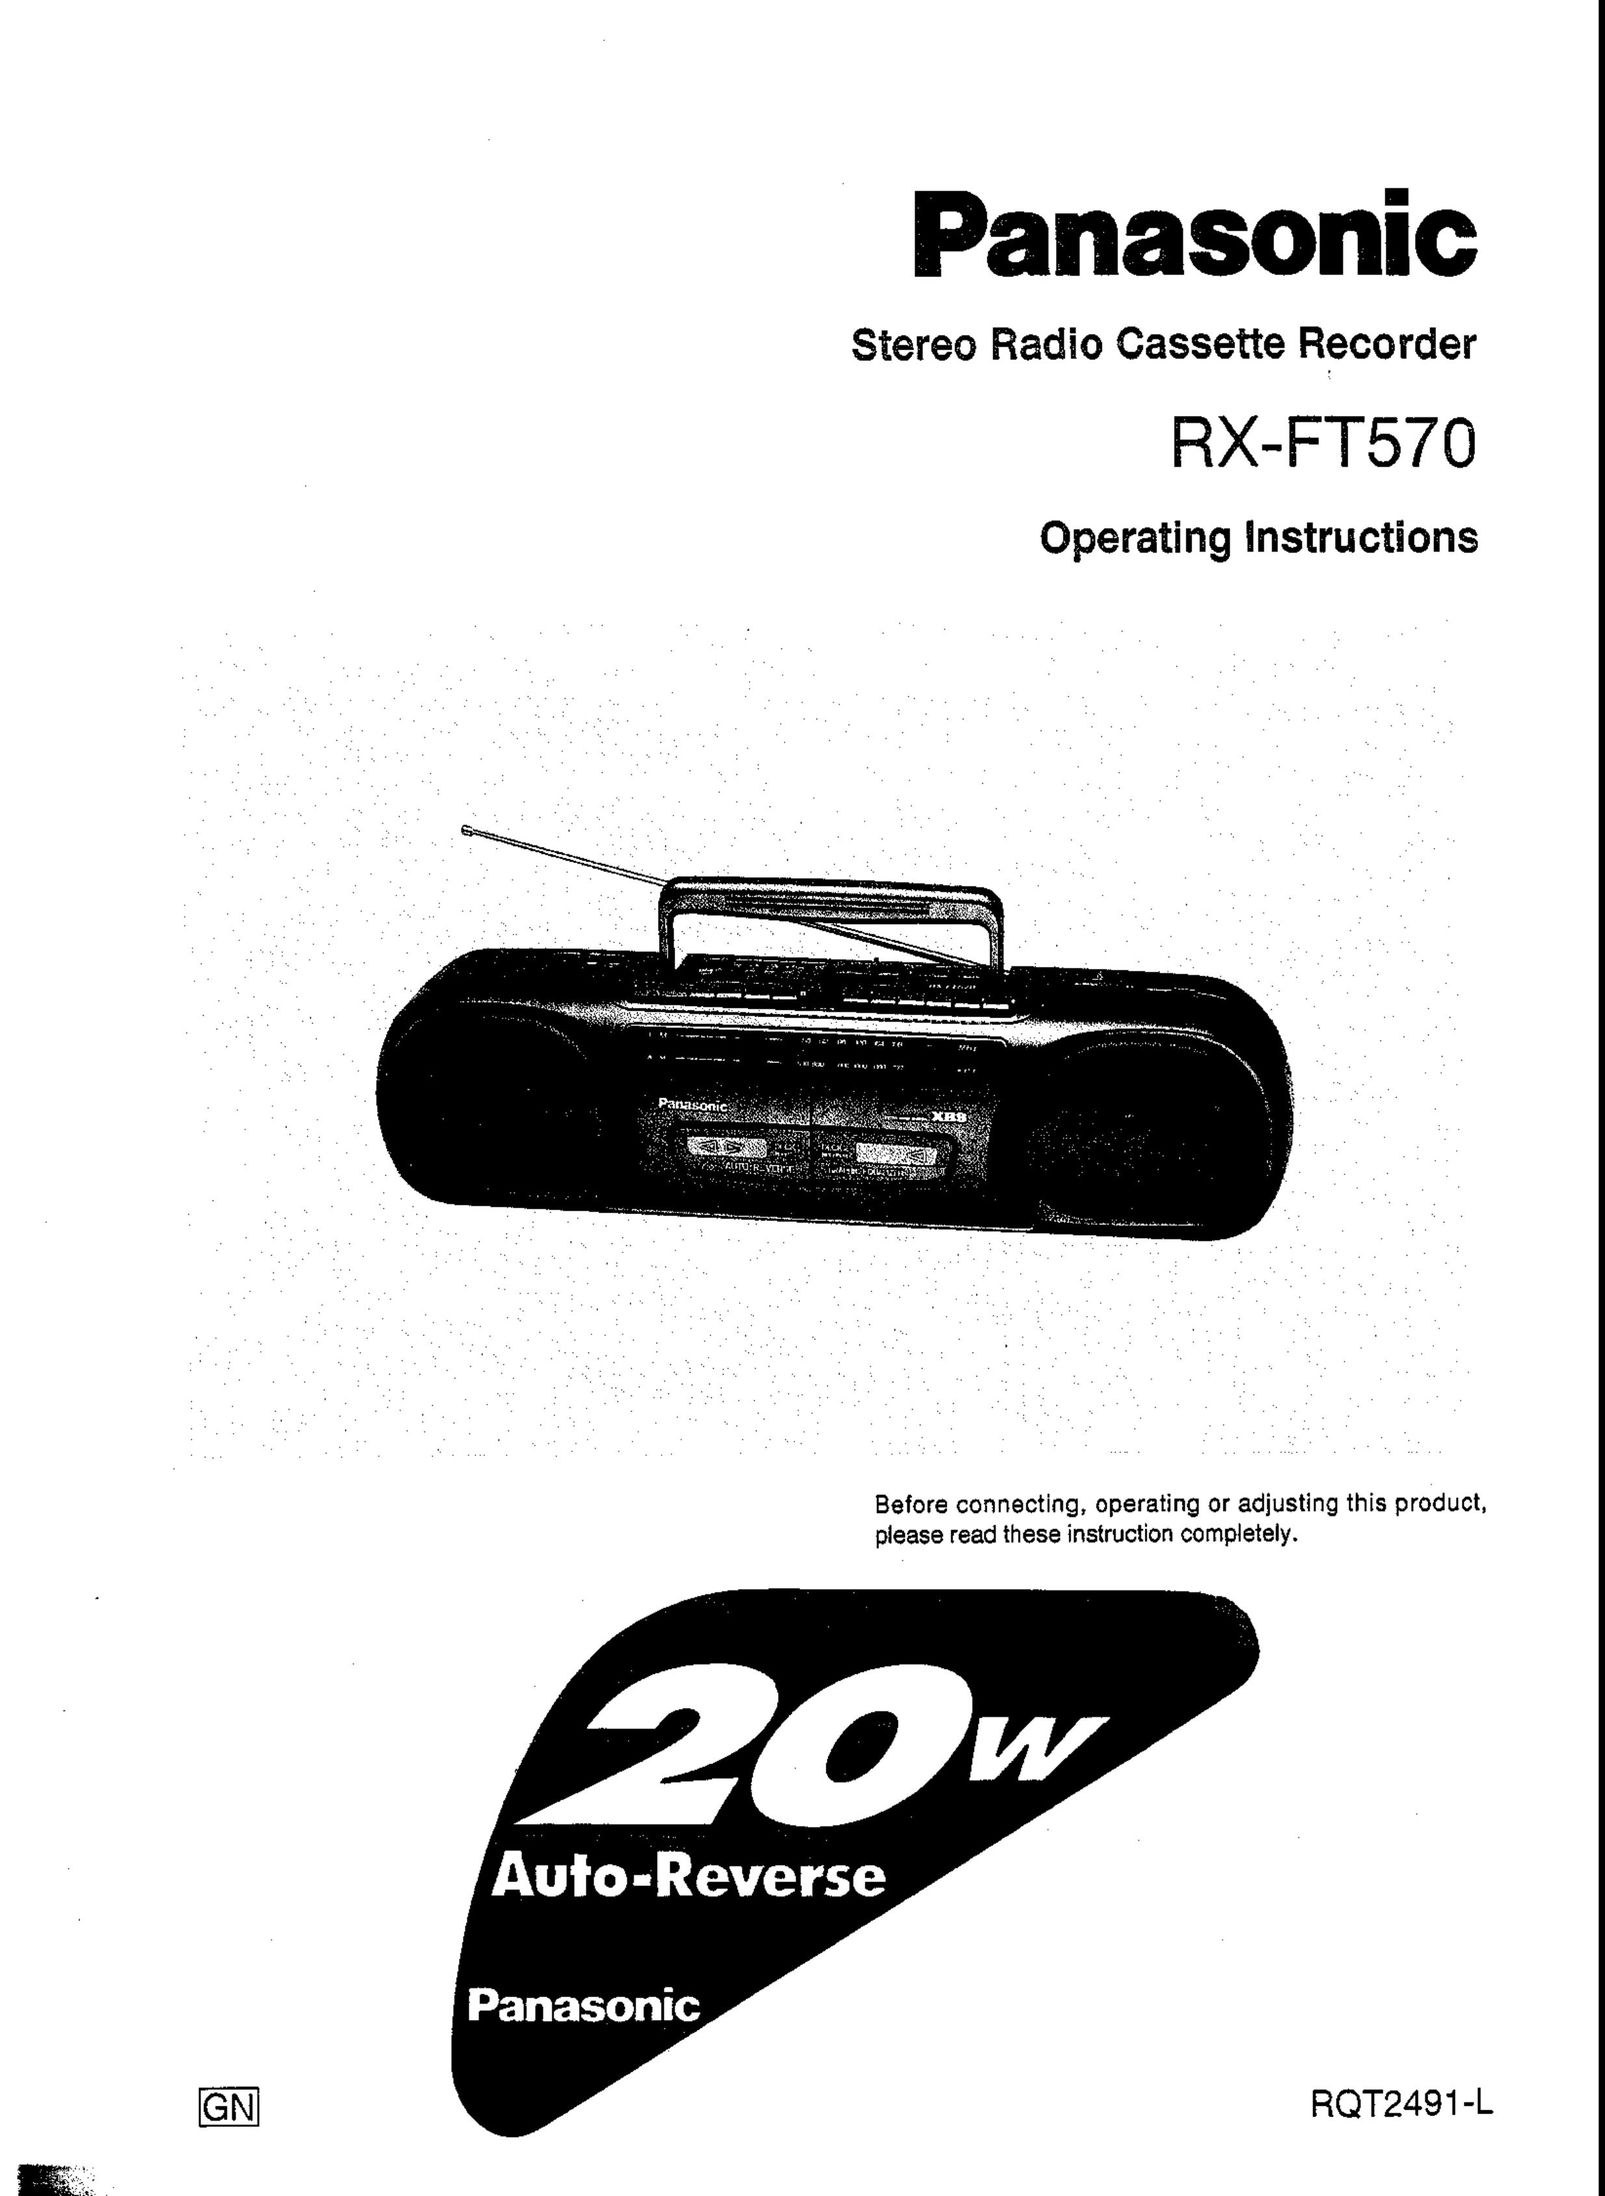 Panasonic RX-FT570 Cassette Player User Manual